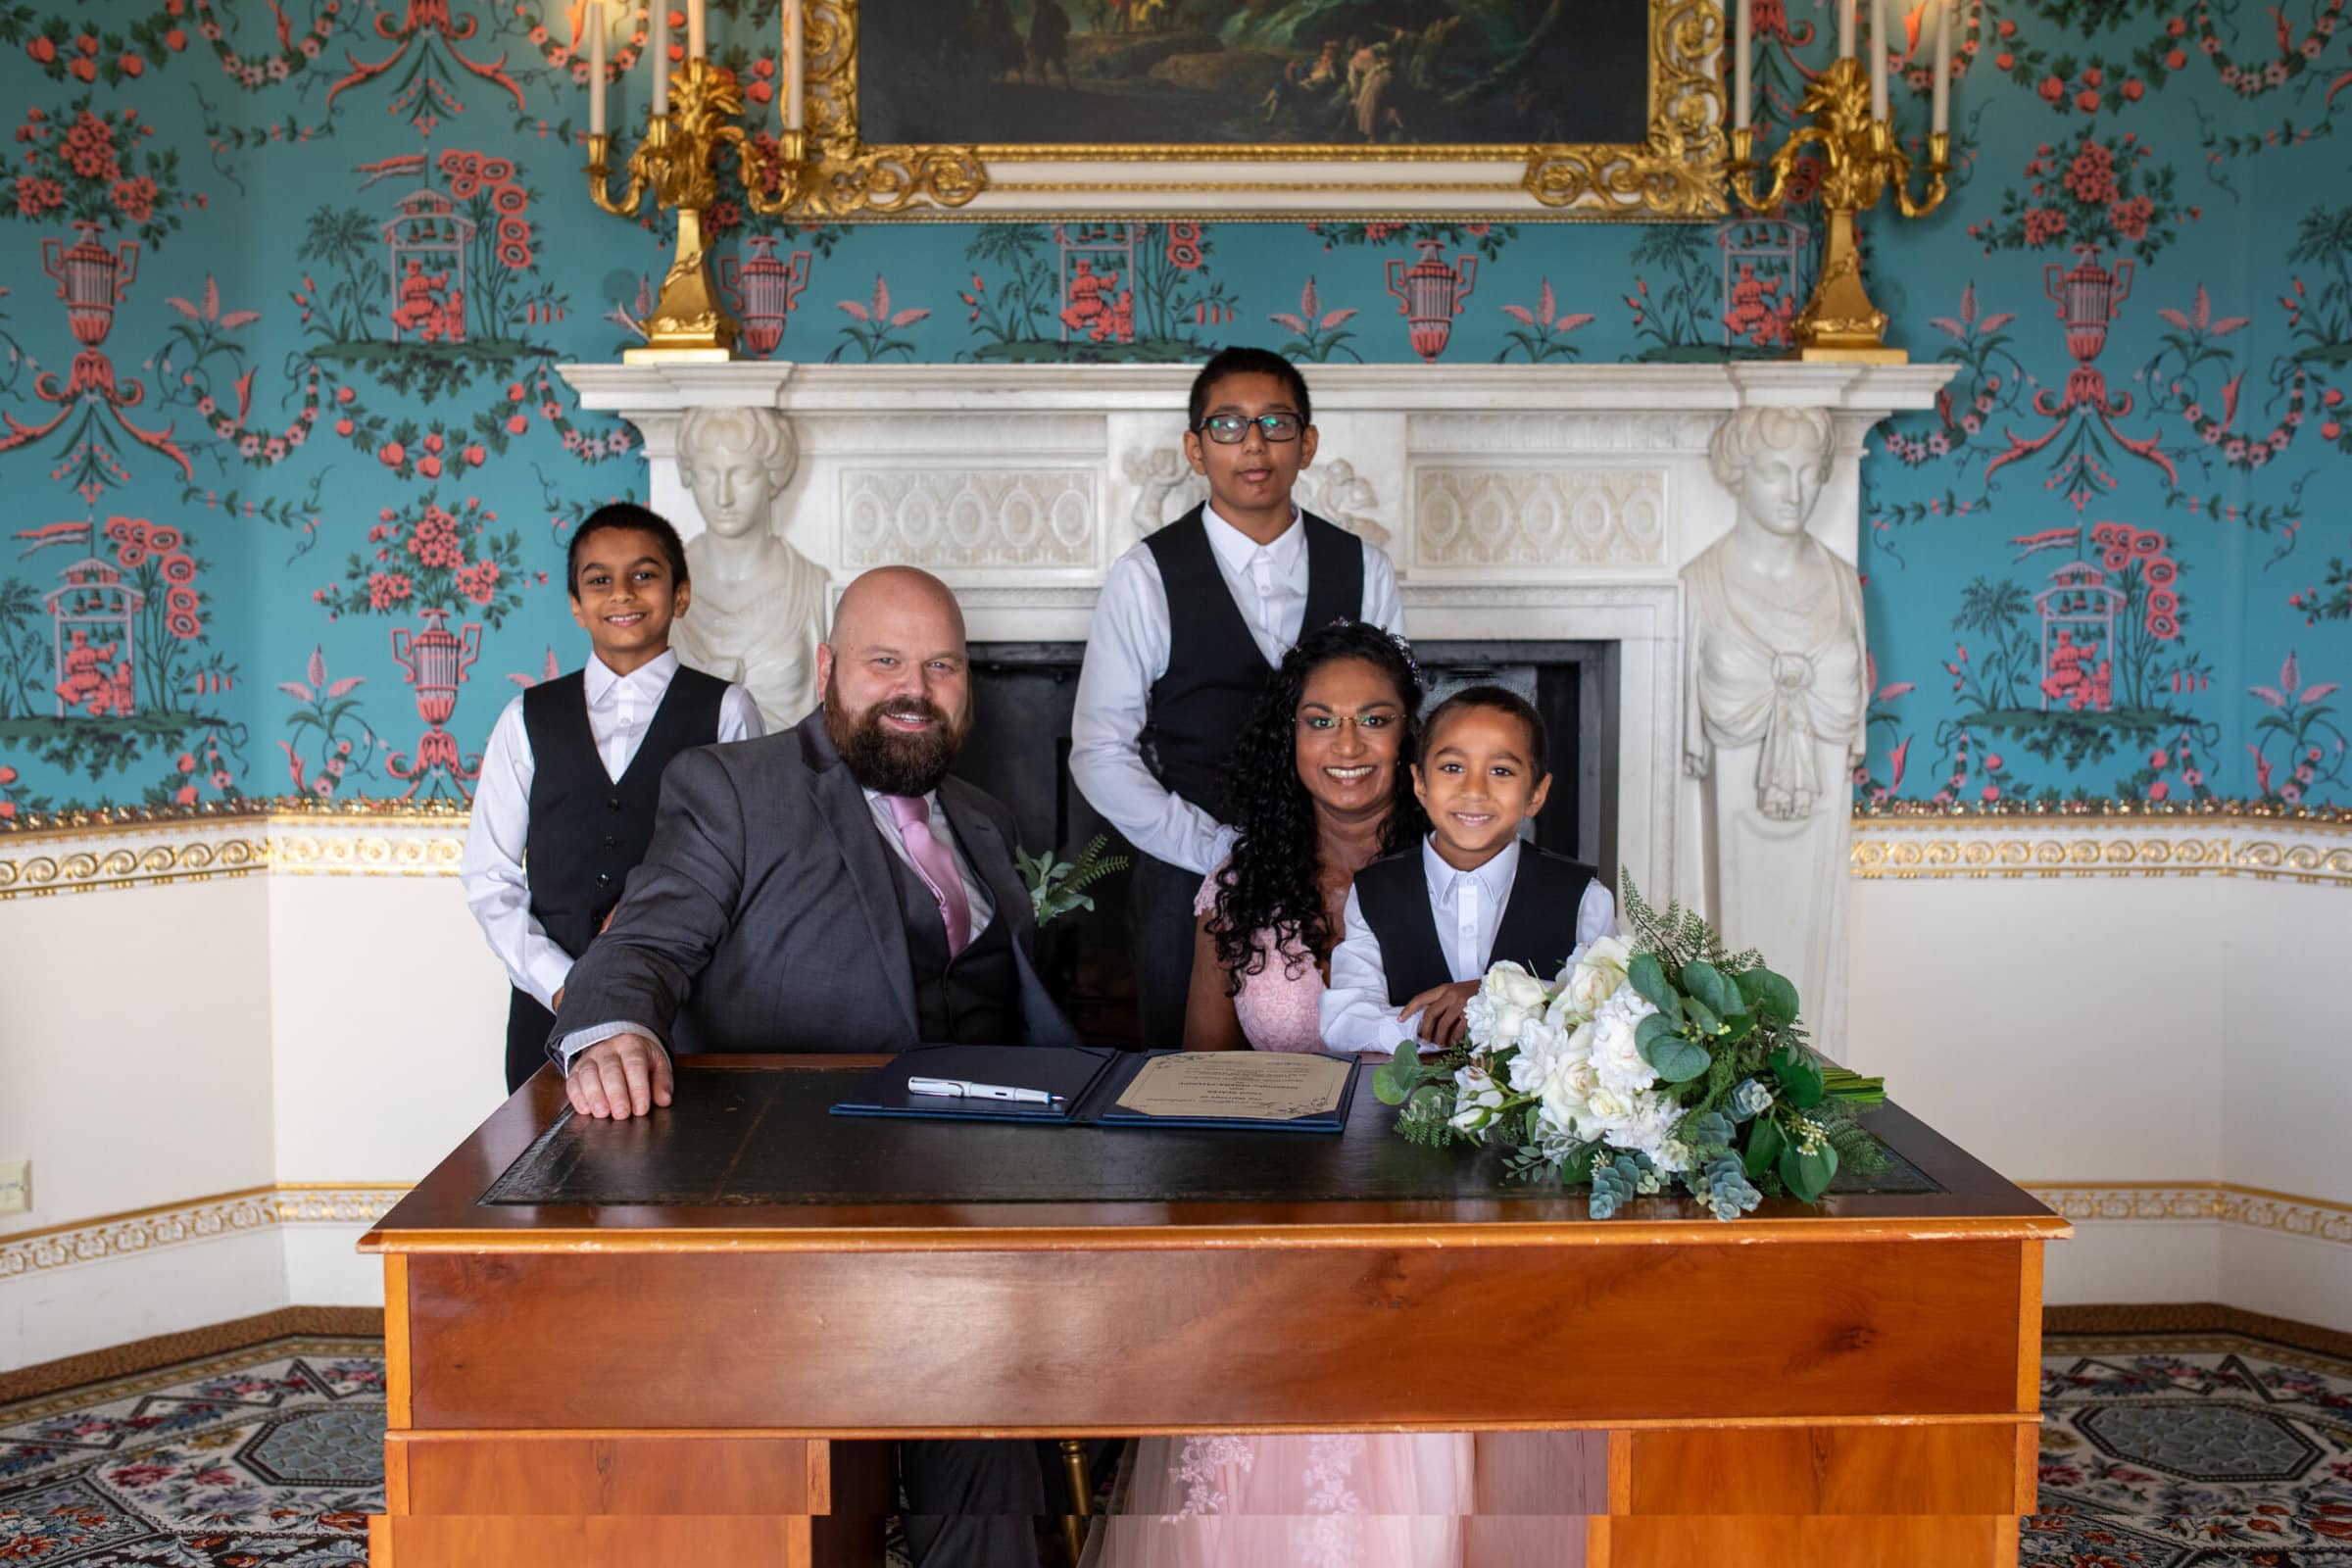 The salon Danson house bexleheath wedding party, bridge groom and their children